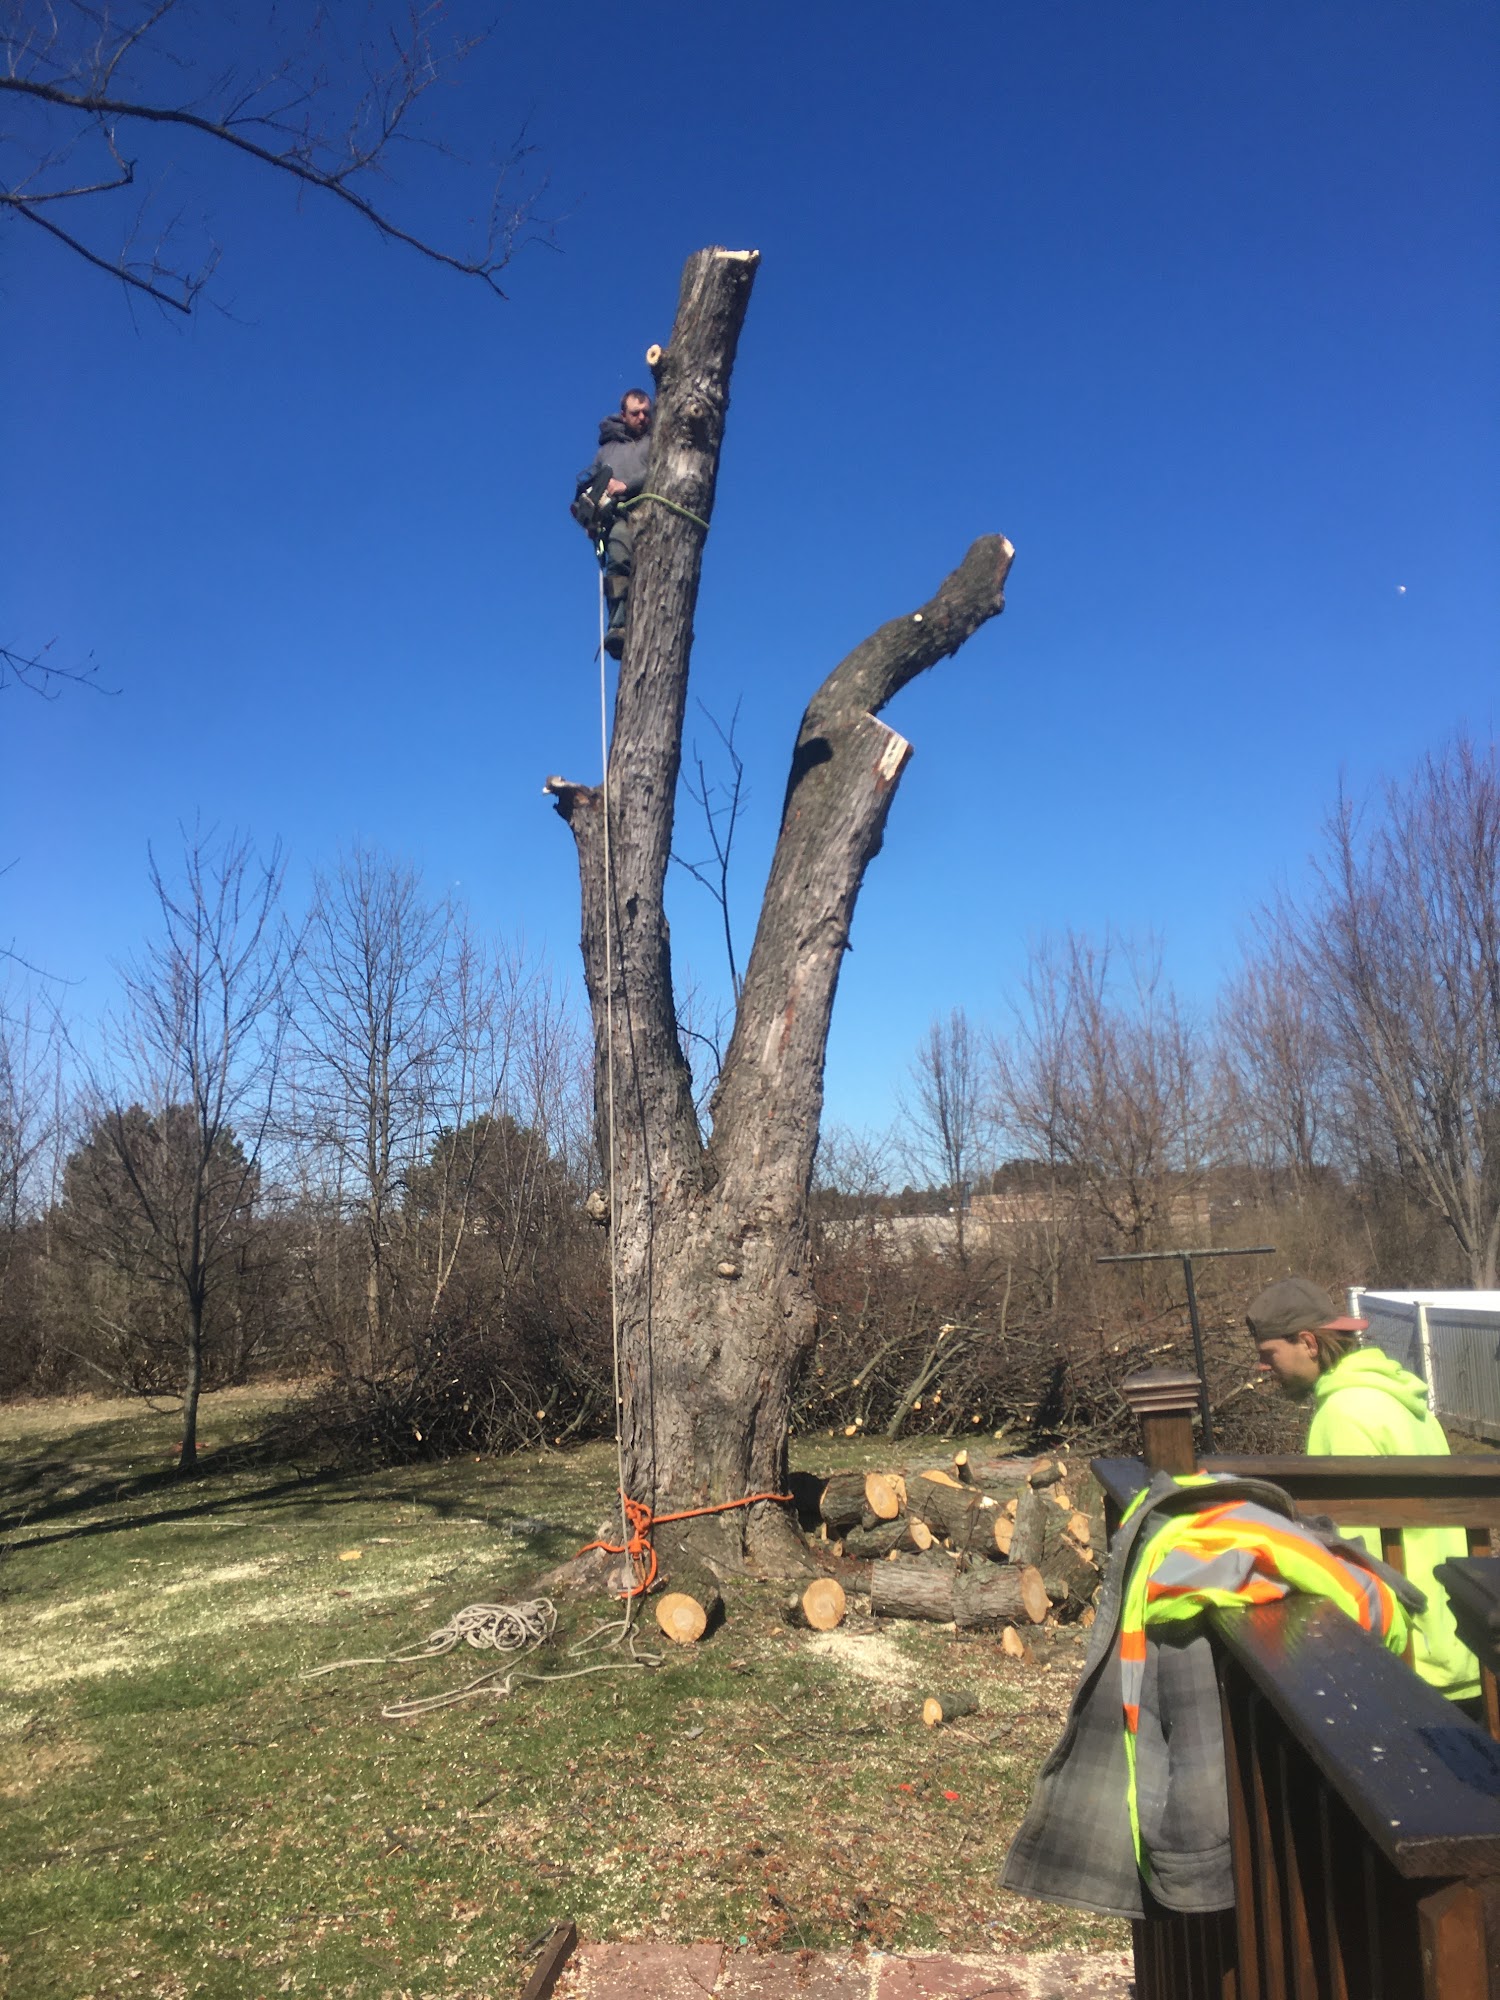 Beamer's tree service